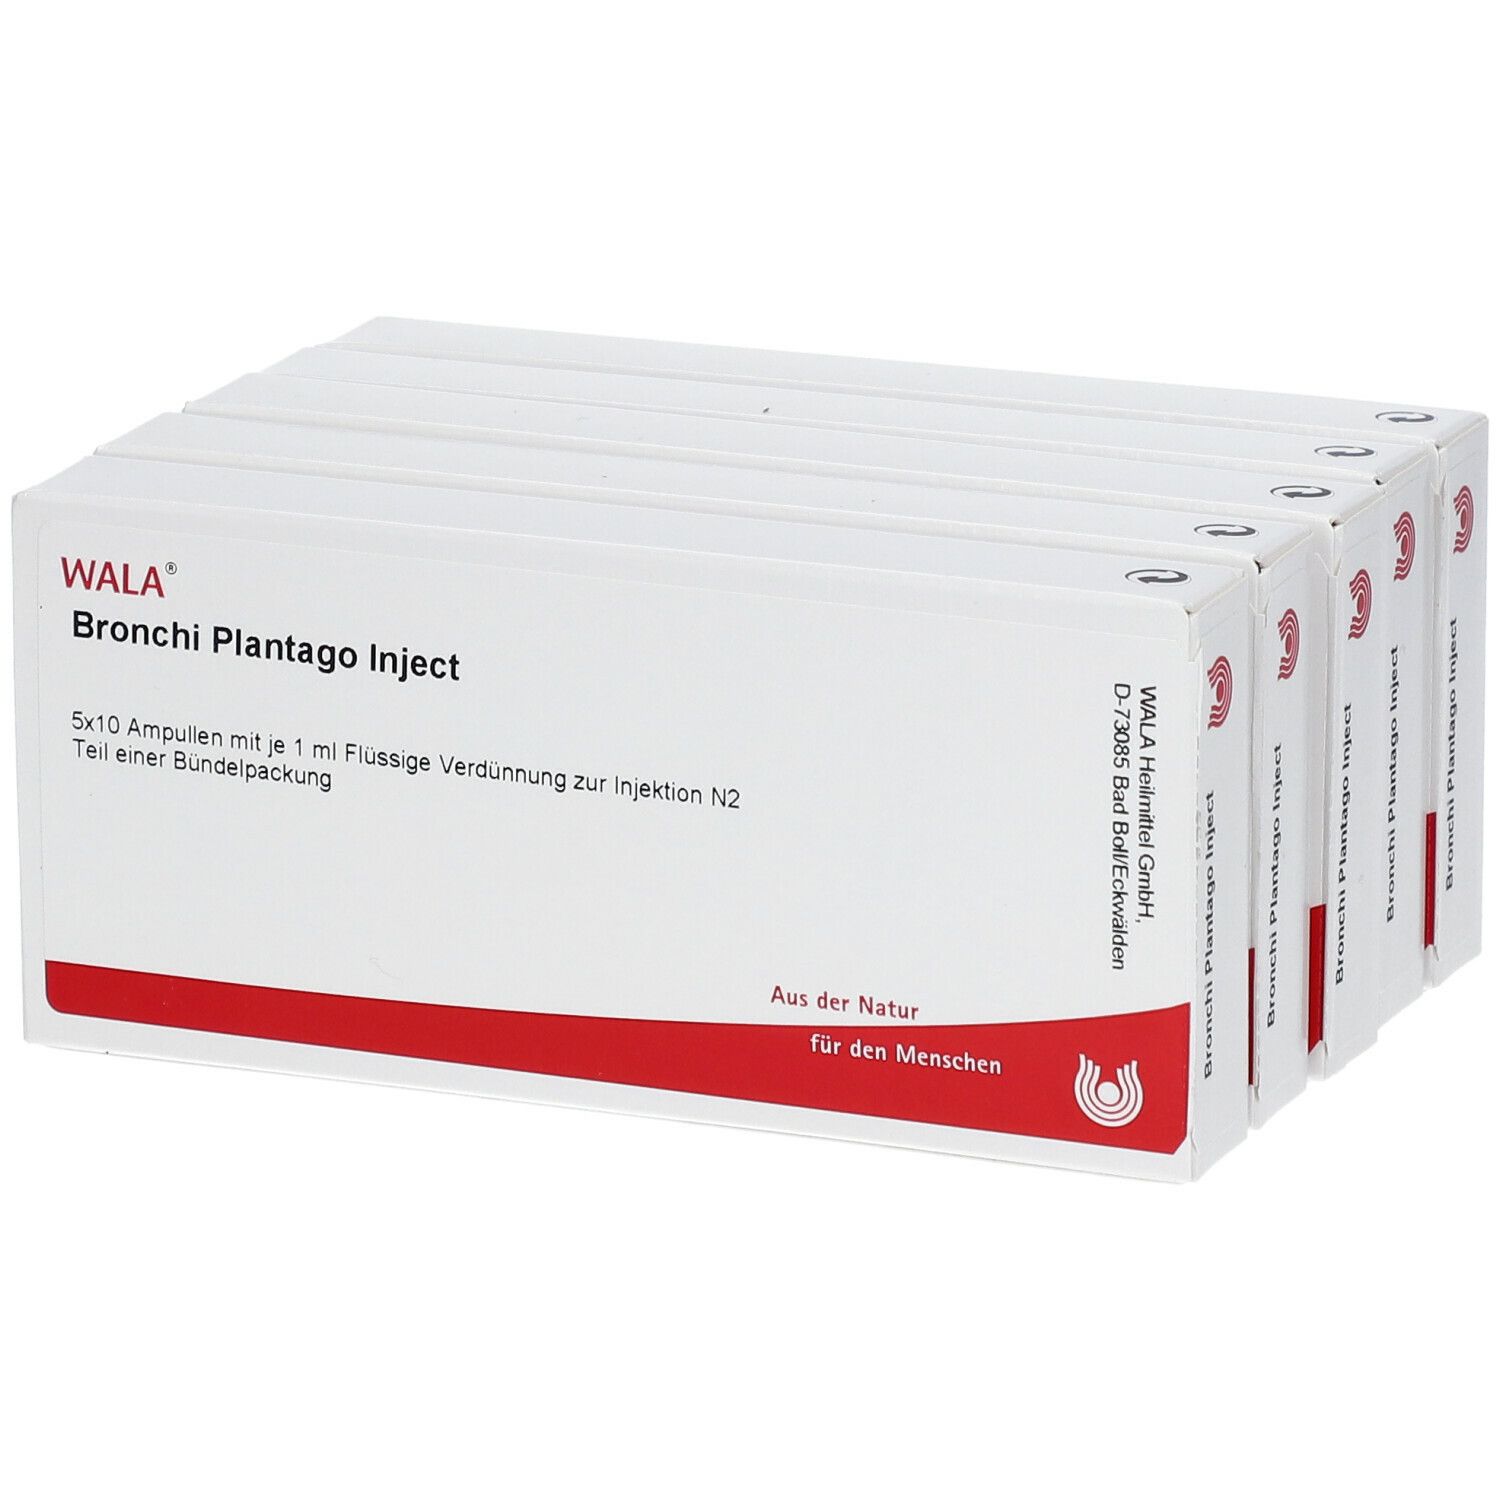 WALA® Bronchi Plantago Inject Ampullen